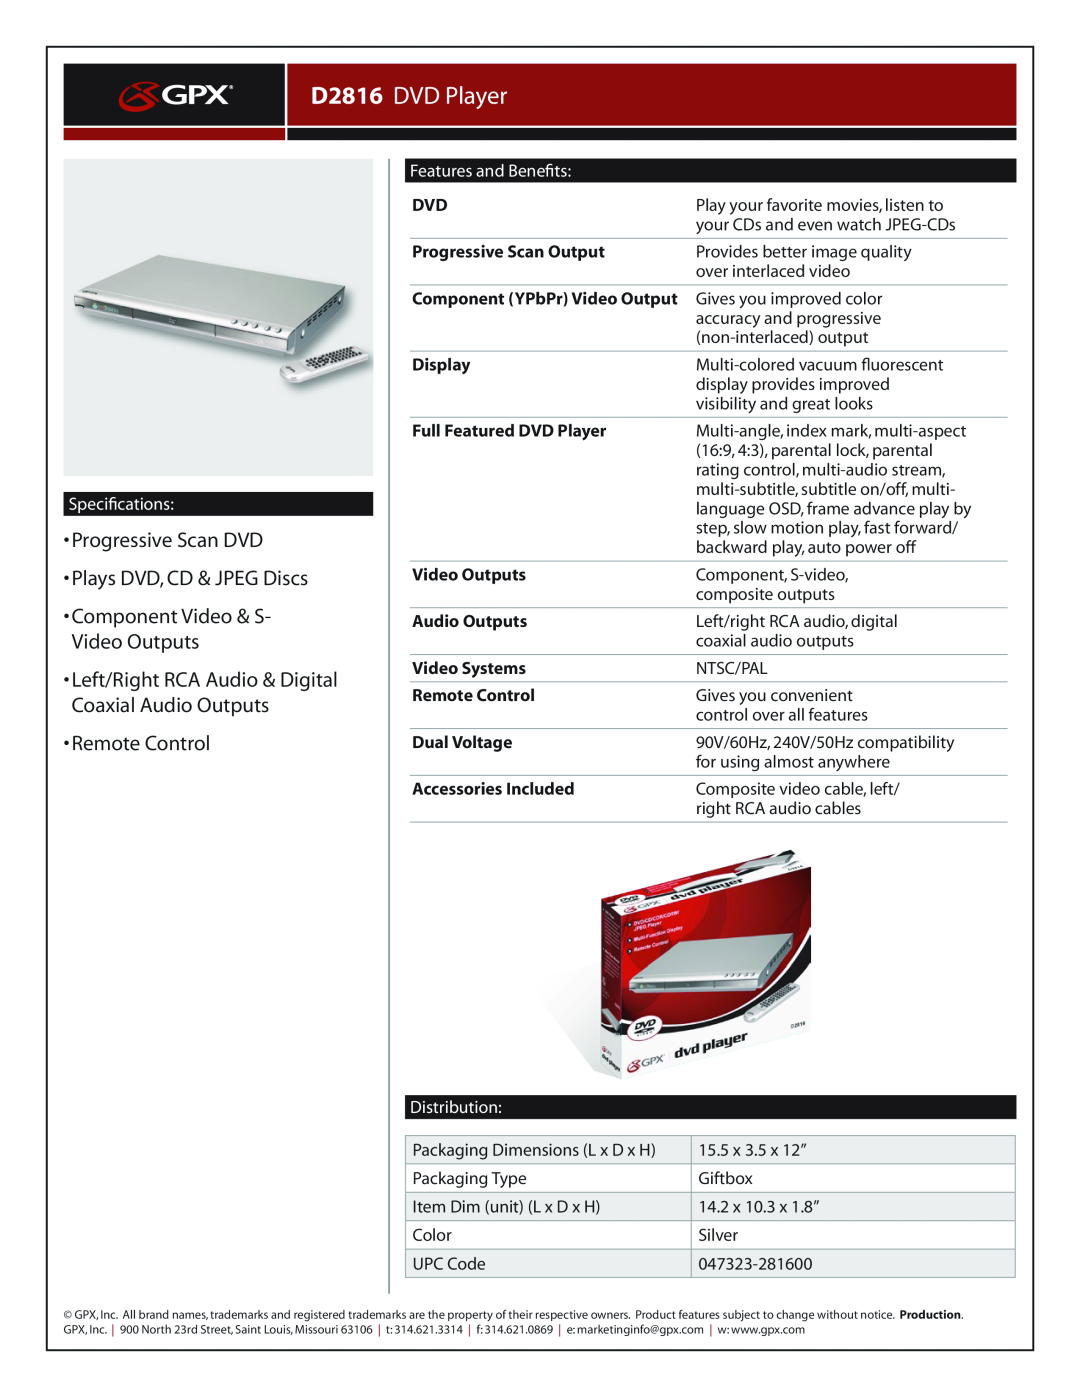 GPX D2816 DVD Player, Progressive Scan DVD Plays DVD, CD & JPEG Discs, Component Video & S- Video Outputs, Distribution 